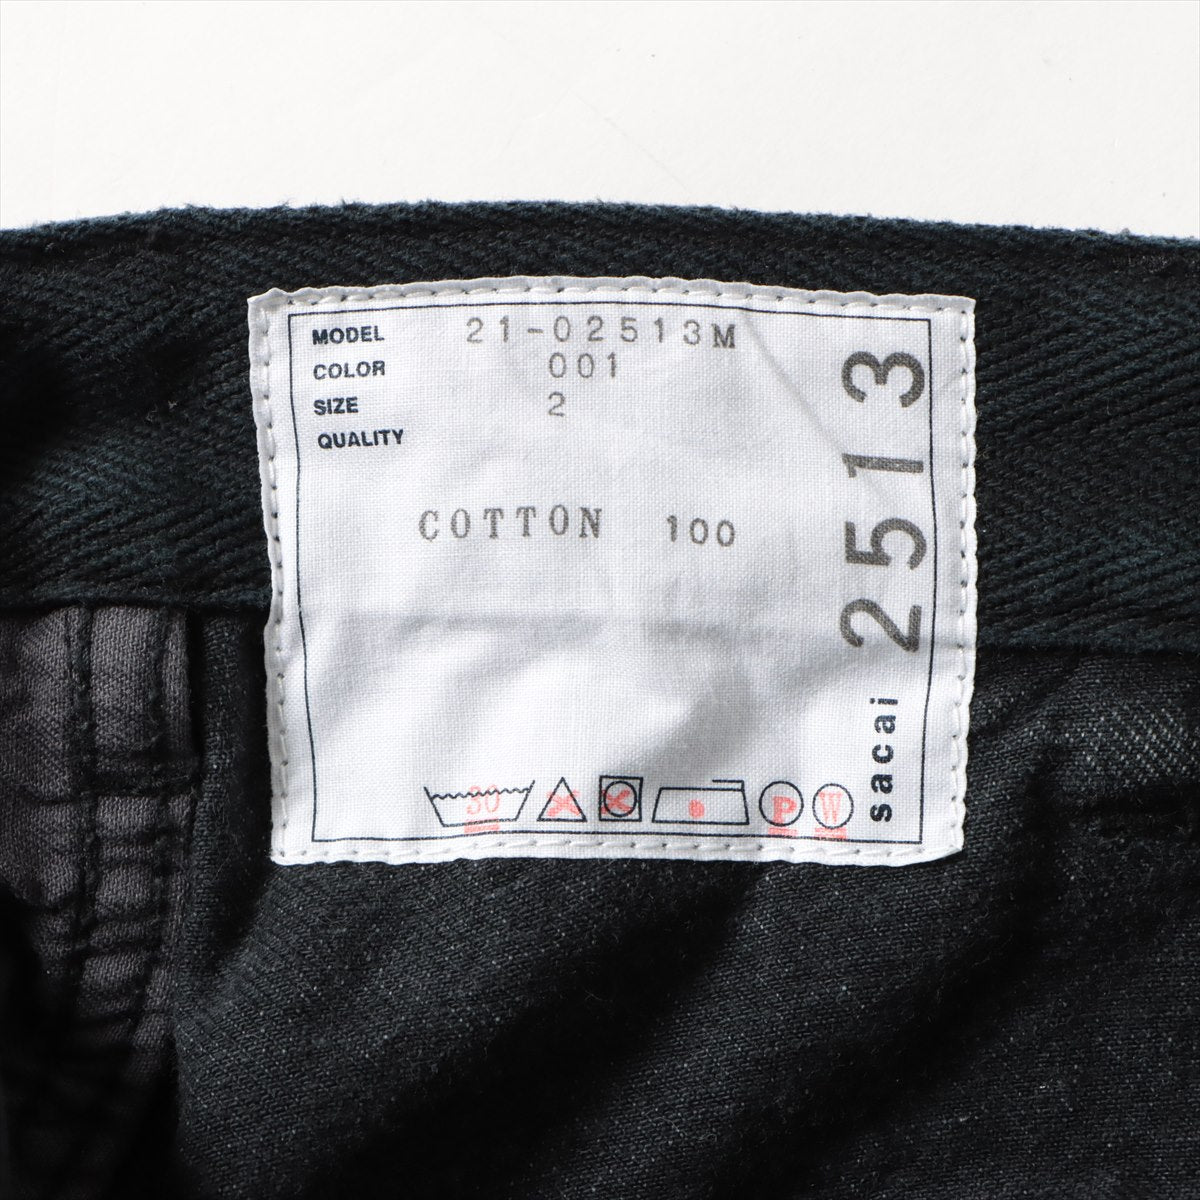 Sacai 21AW Cotton Denim pants 2 Men's Black  21-02513M Belted double knee denim